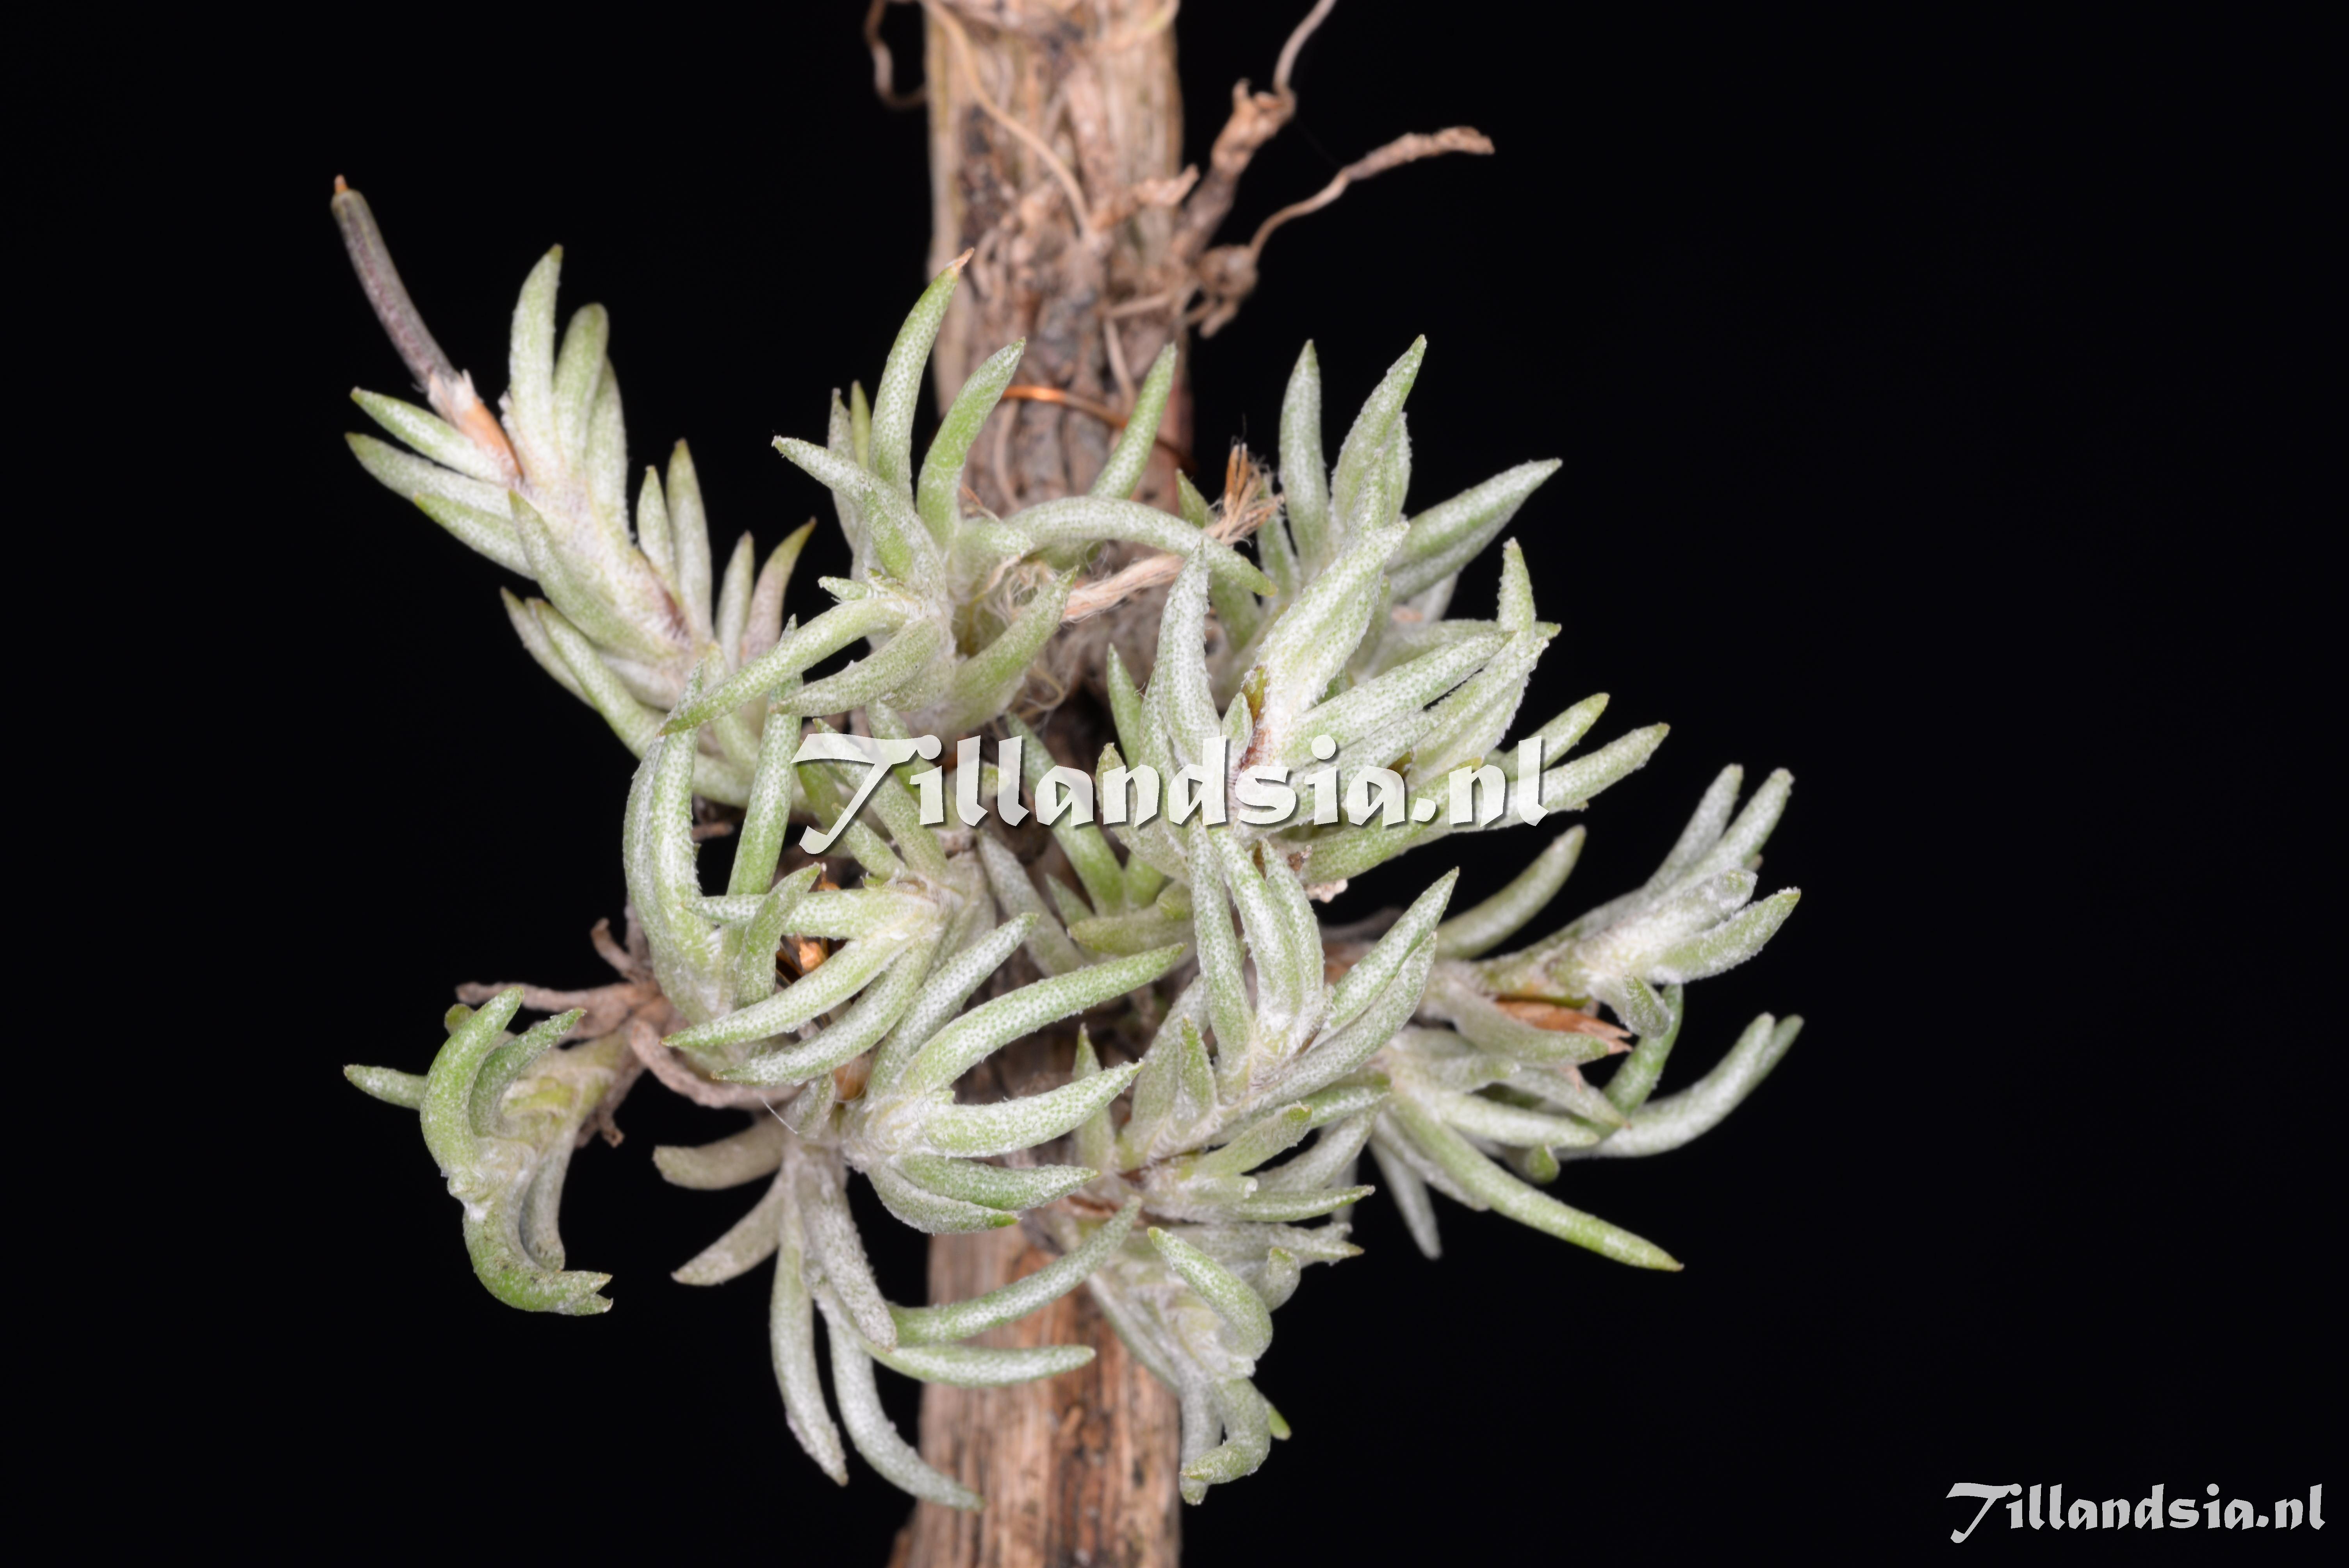 3140 Tillandsia capillaris